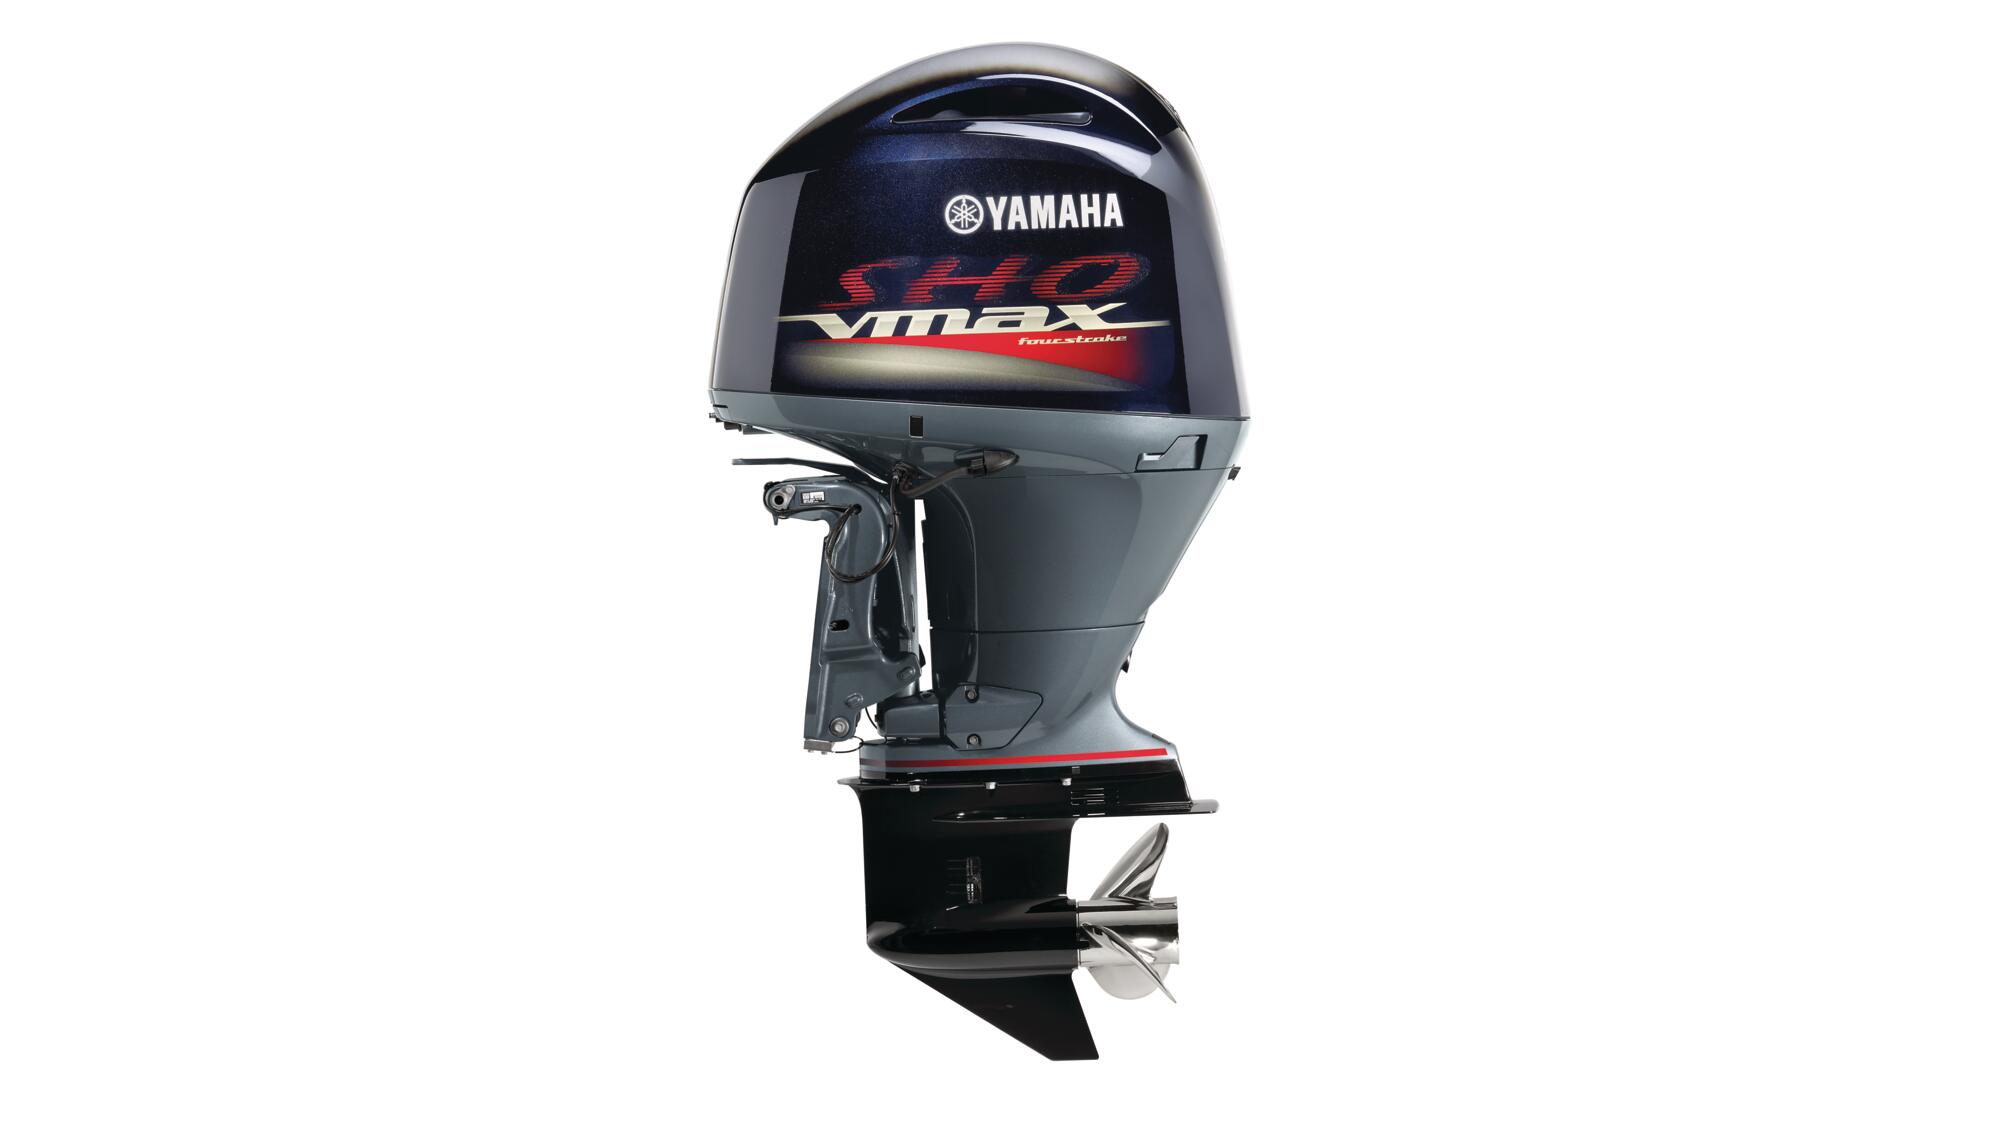 Unique Yamaha ‘V MAX SHO’ cowling design